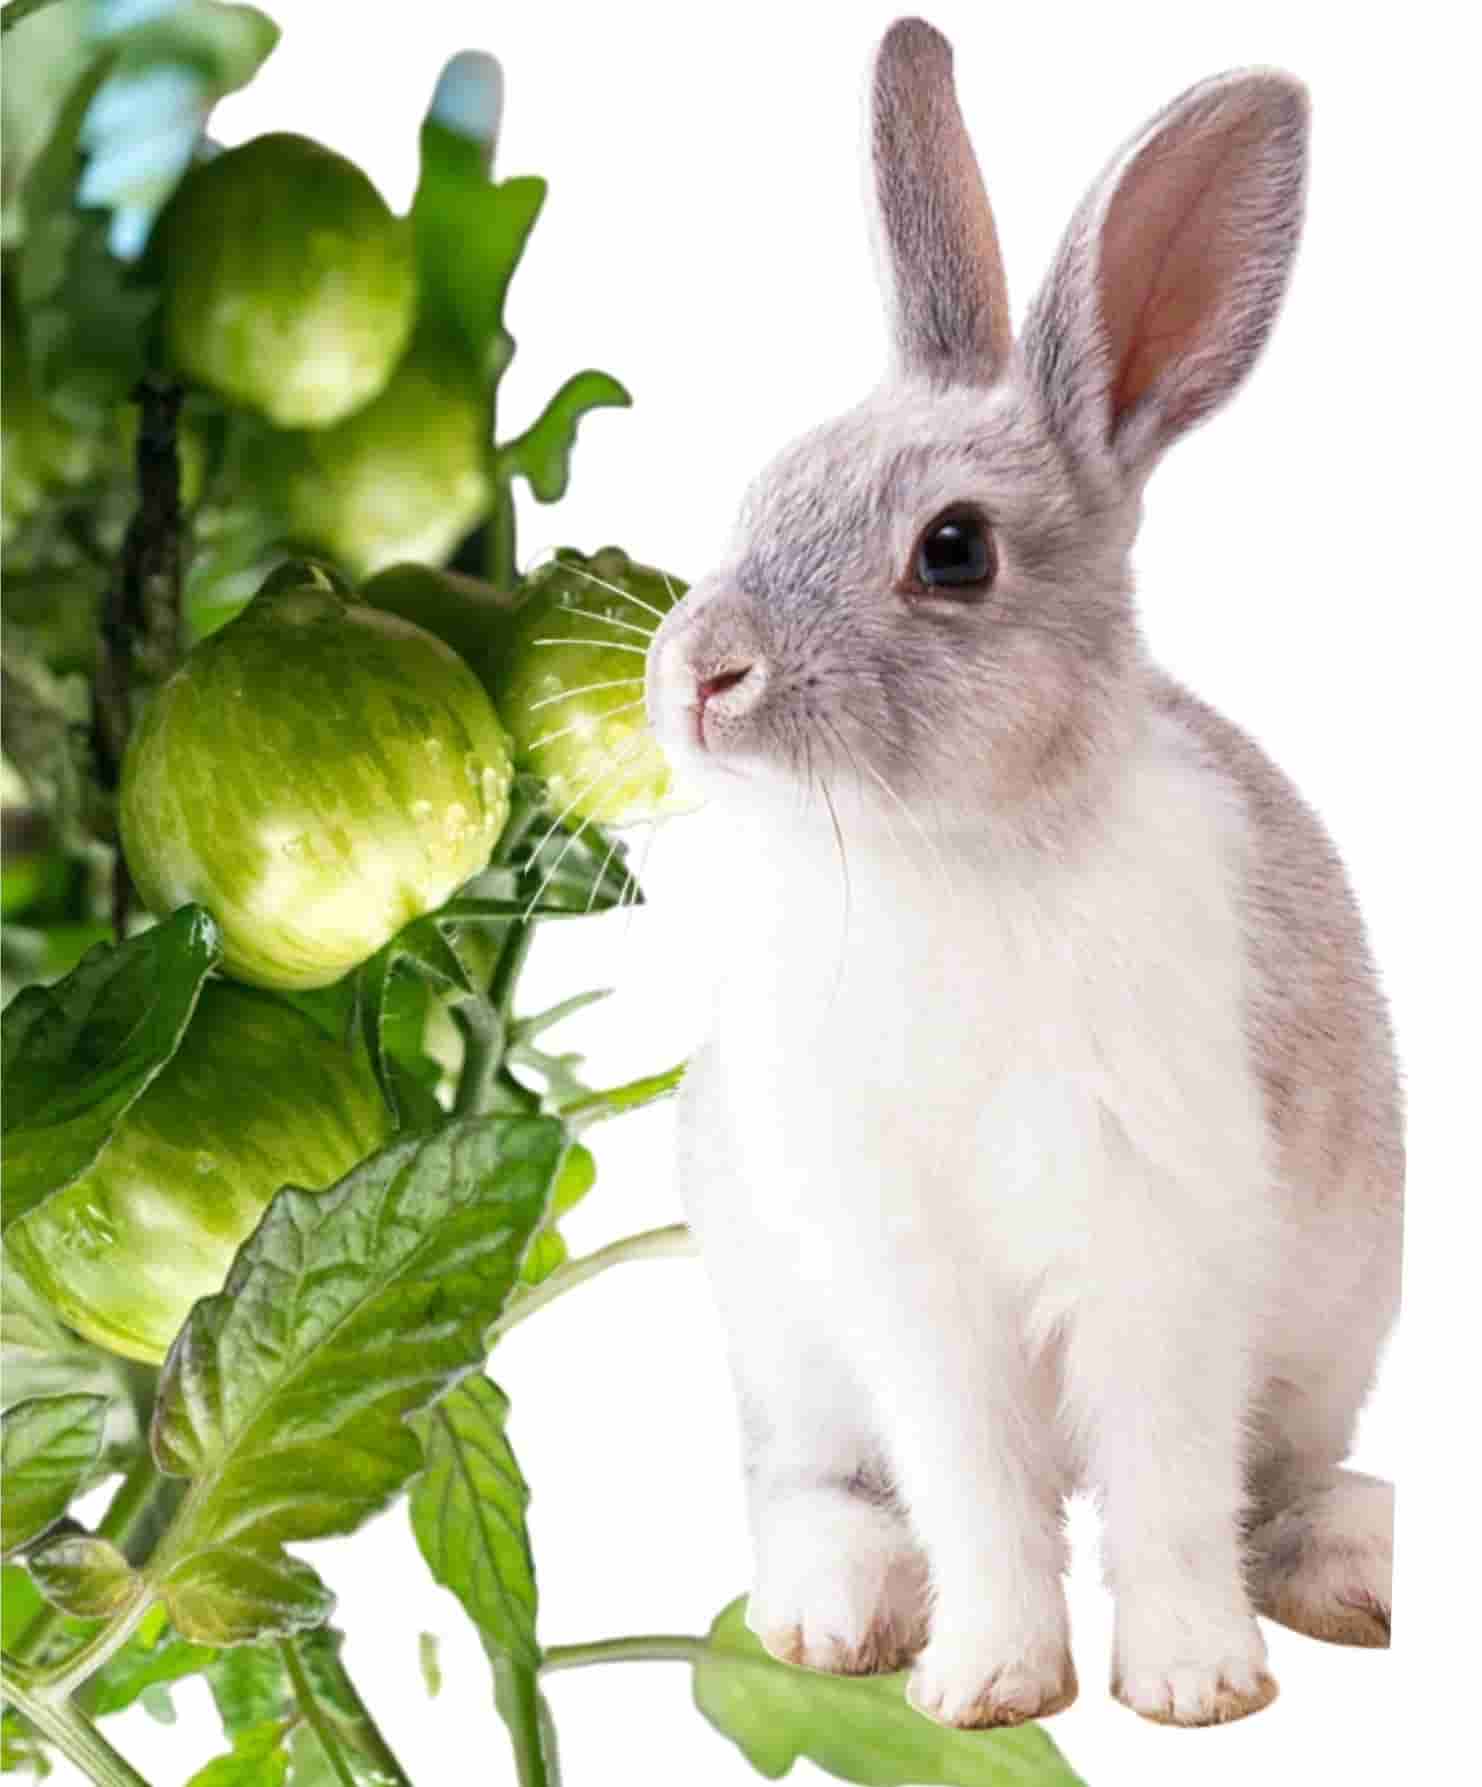 can rabbits eat tomato plants